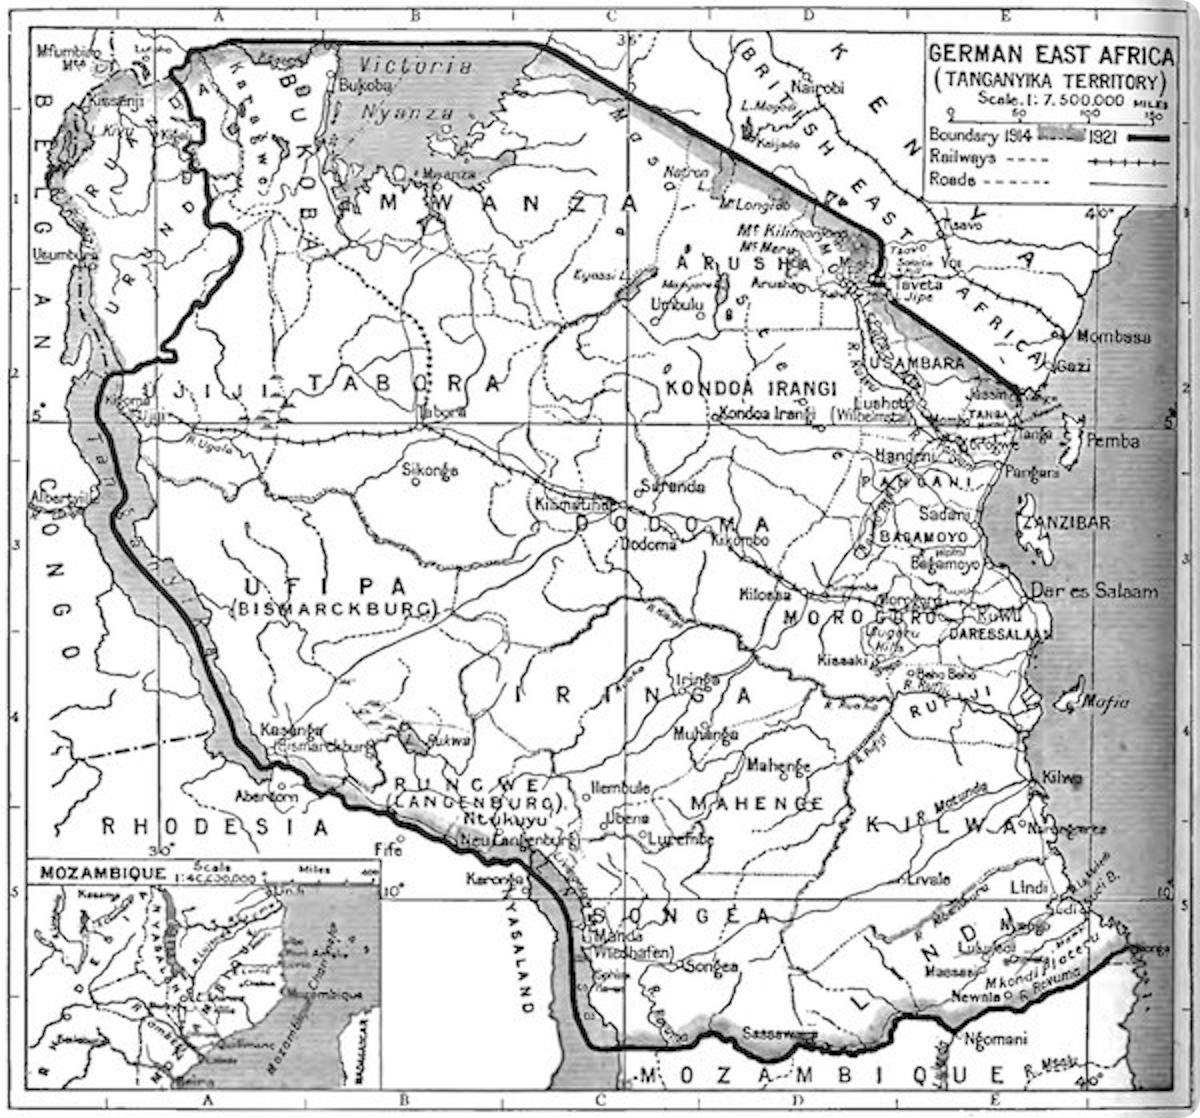 Tanganyika Territory in 1922